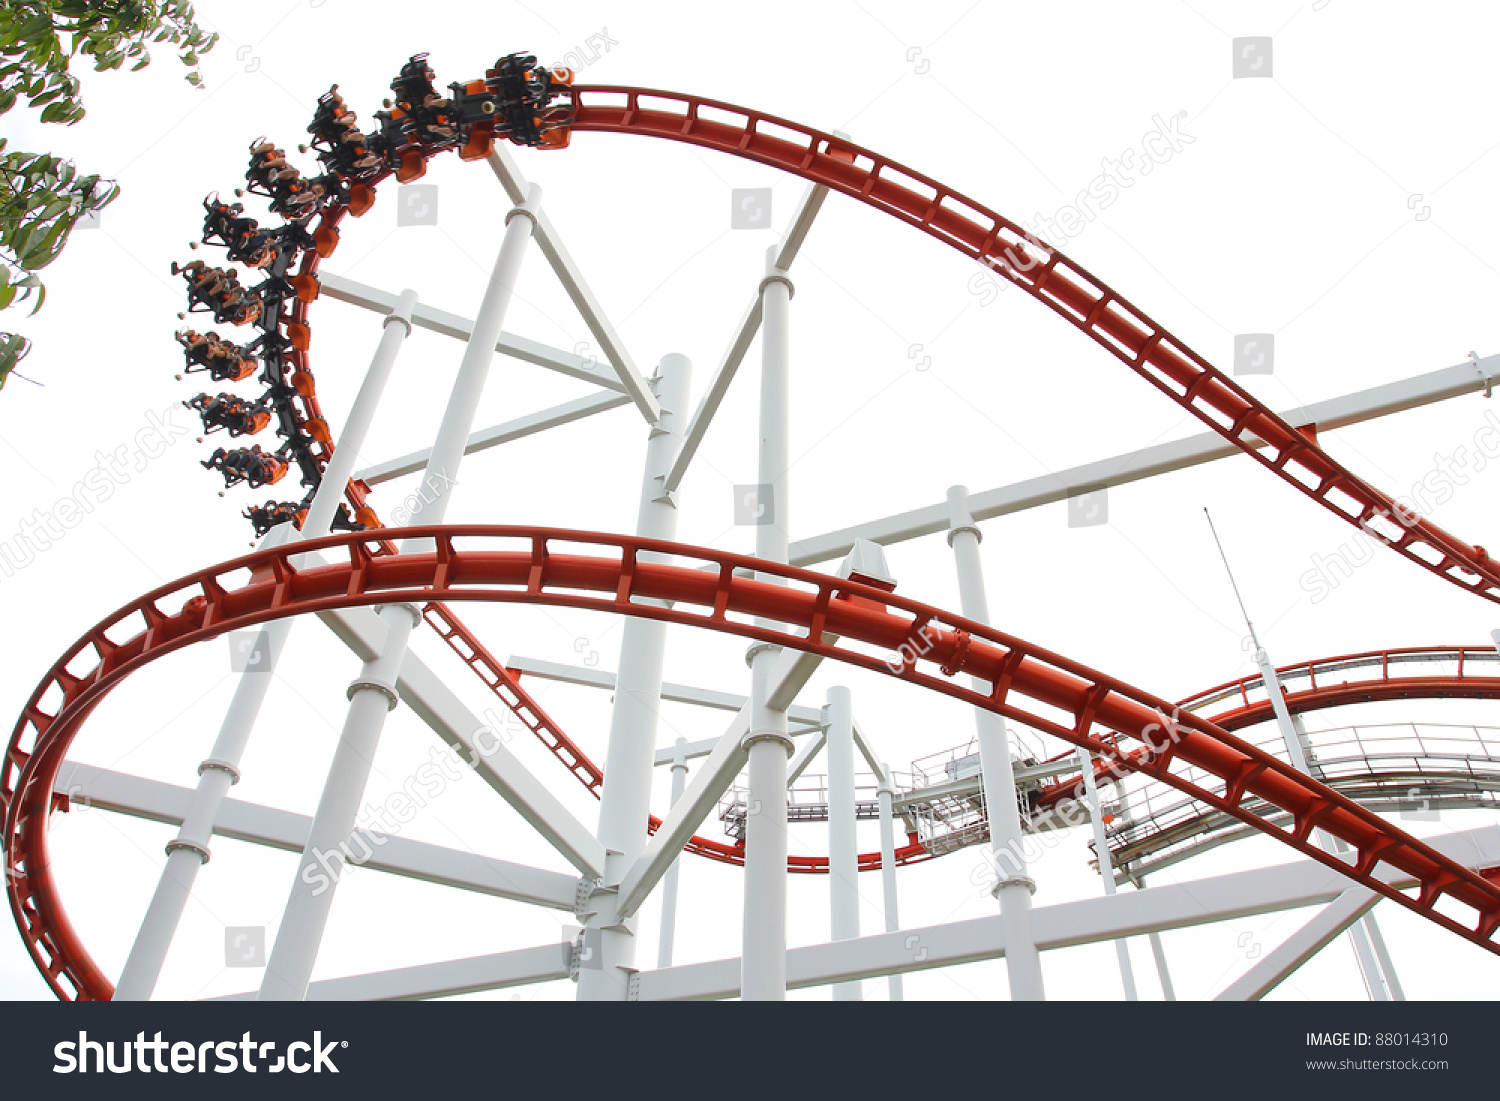 Roller Coaster Track Stock Photo 88014310 : Shutterstock